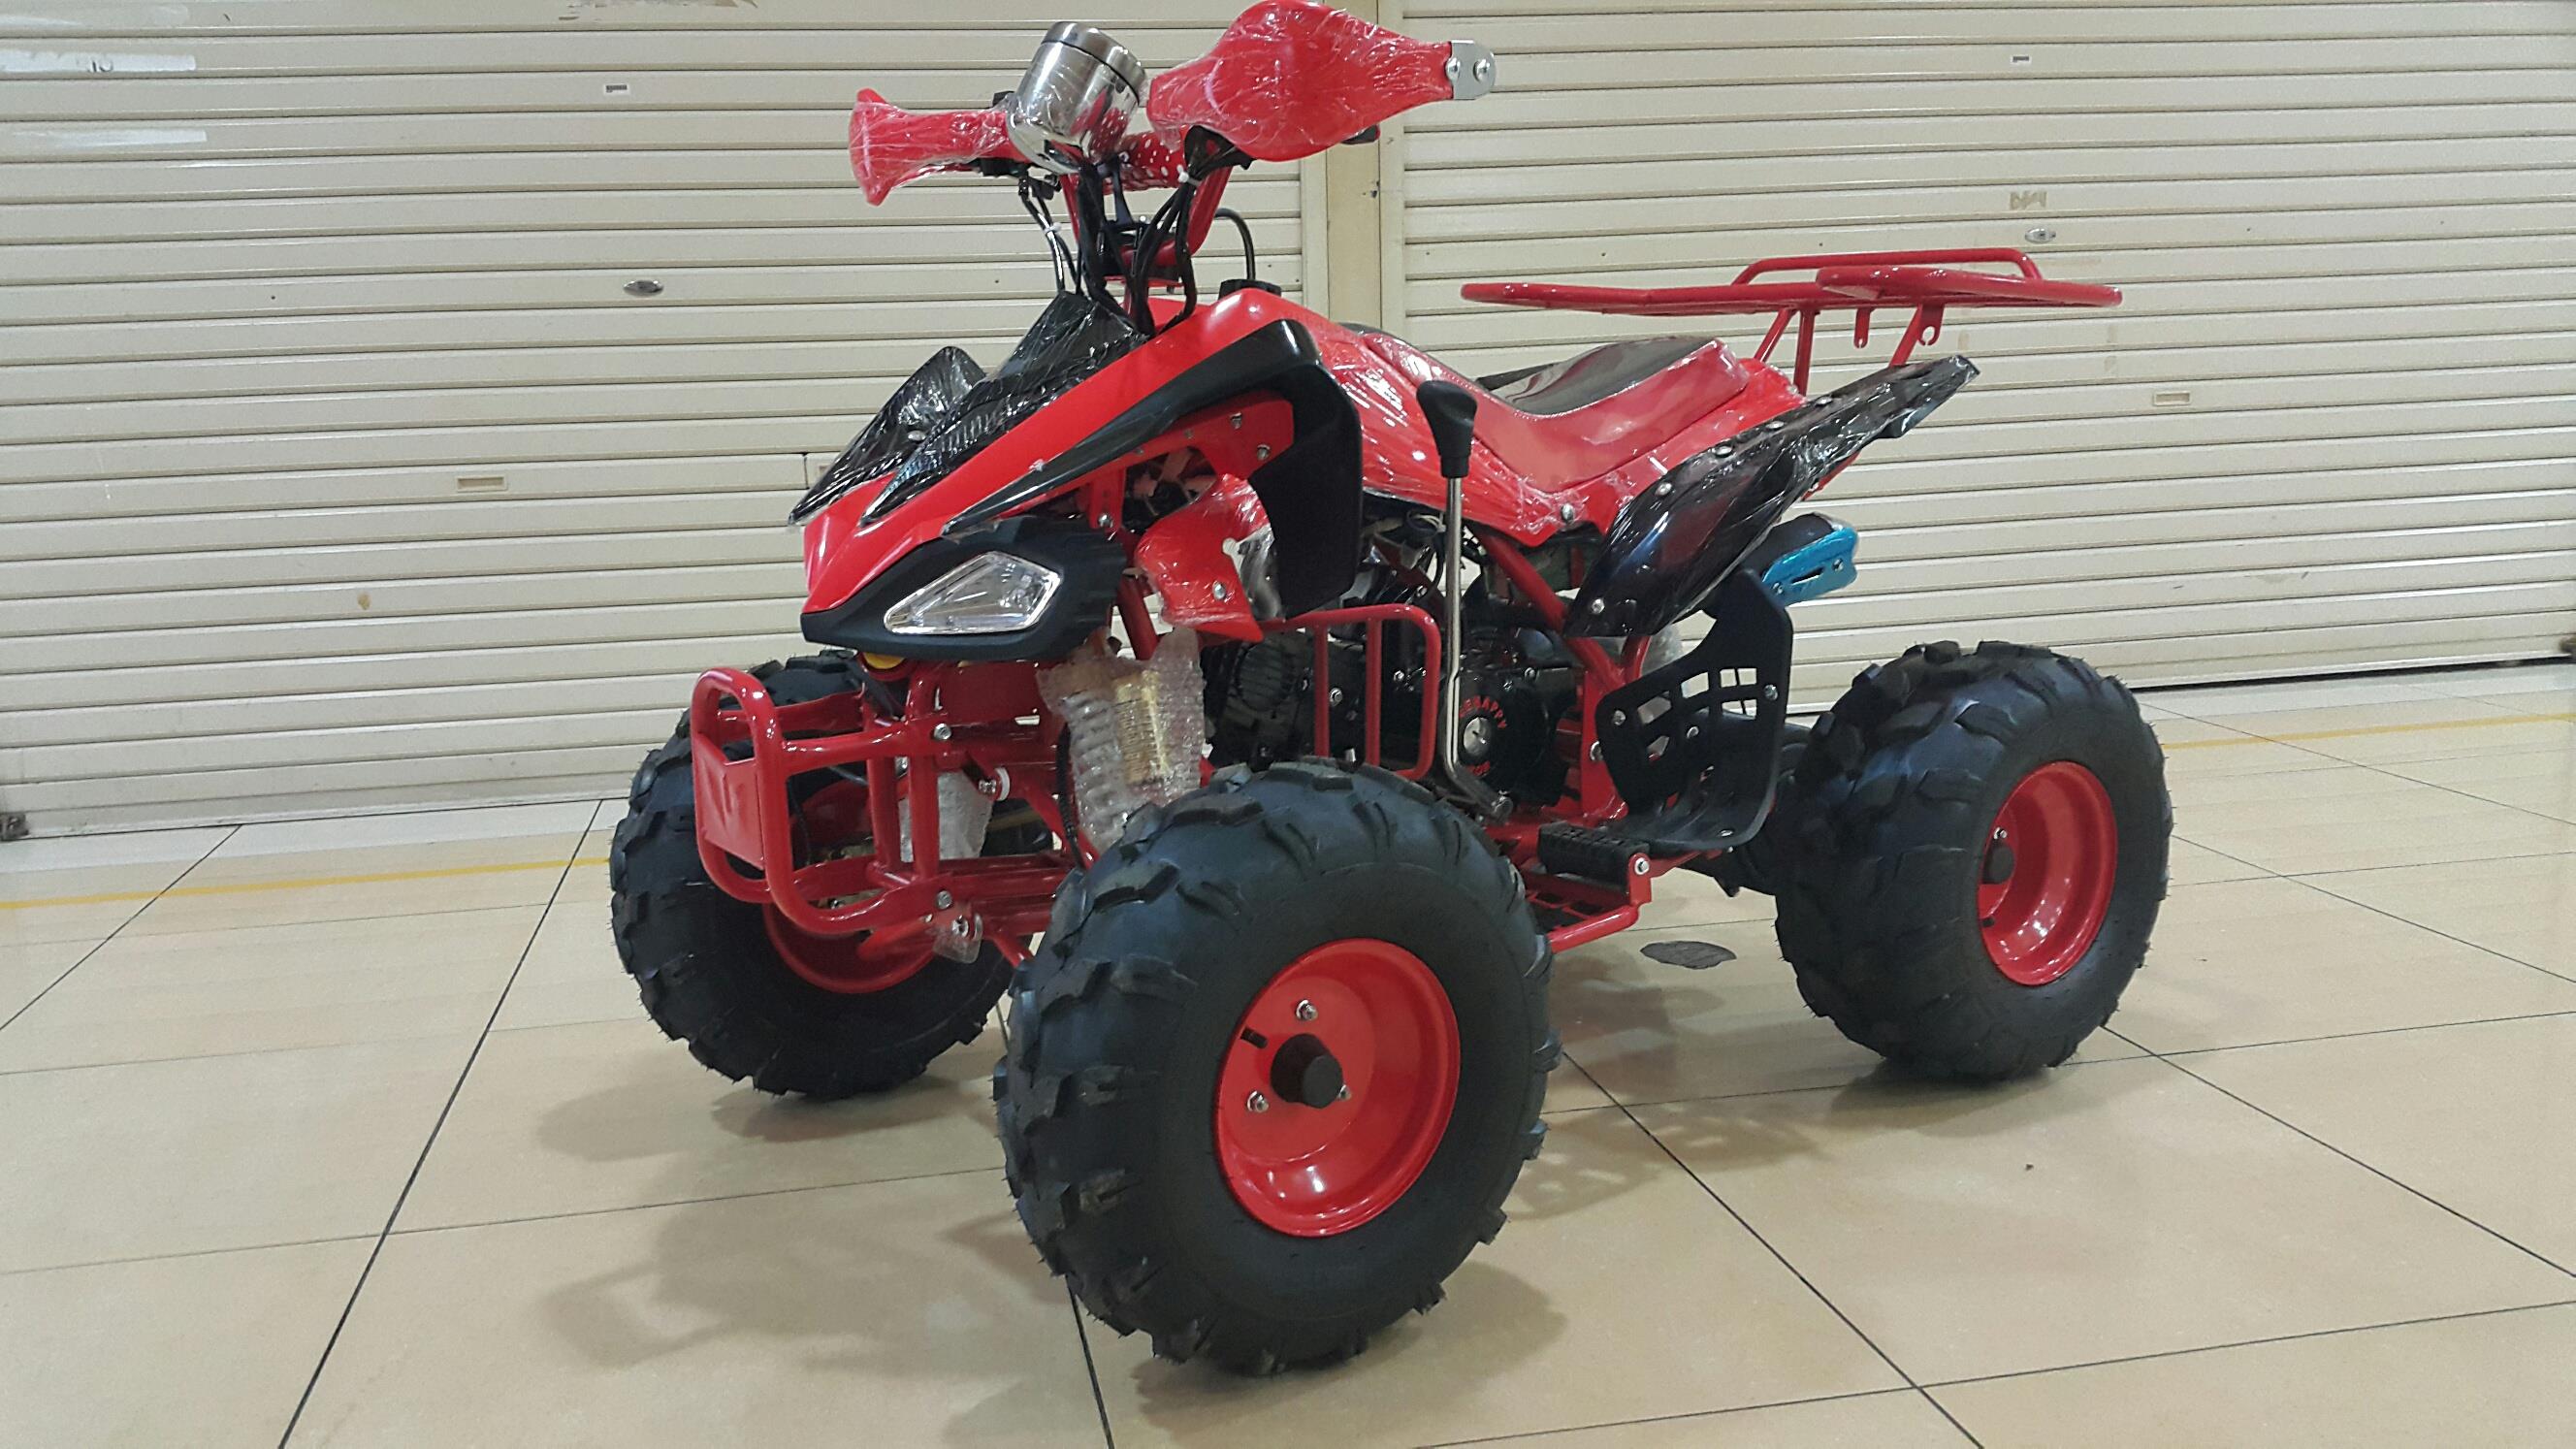 Jual Motor ATV Jakarta Beli Distributor Supplier Eksportir